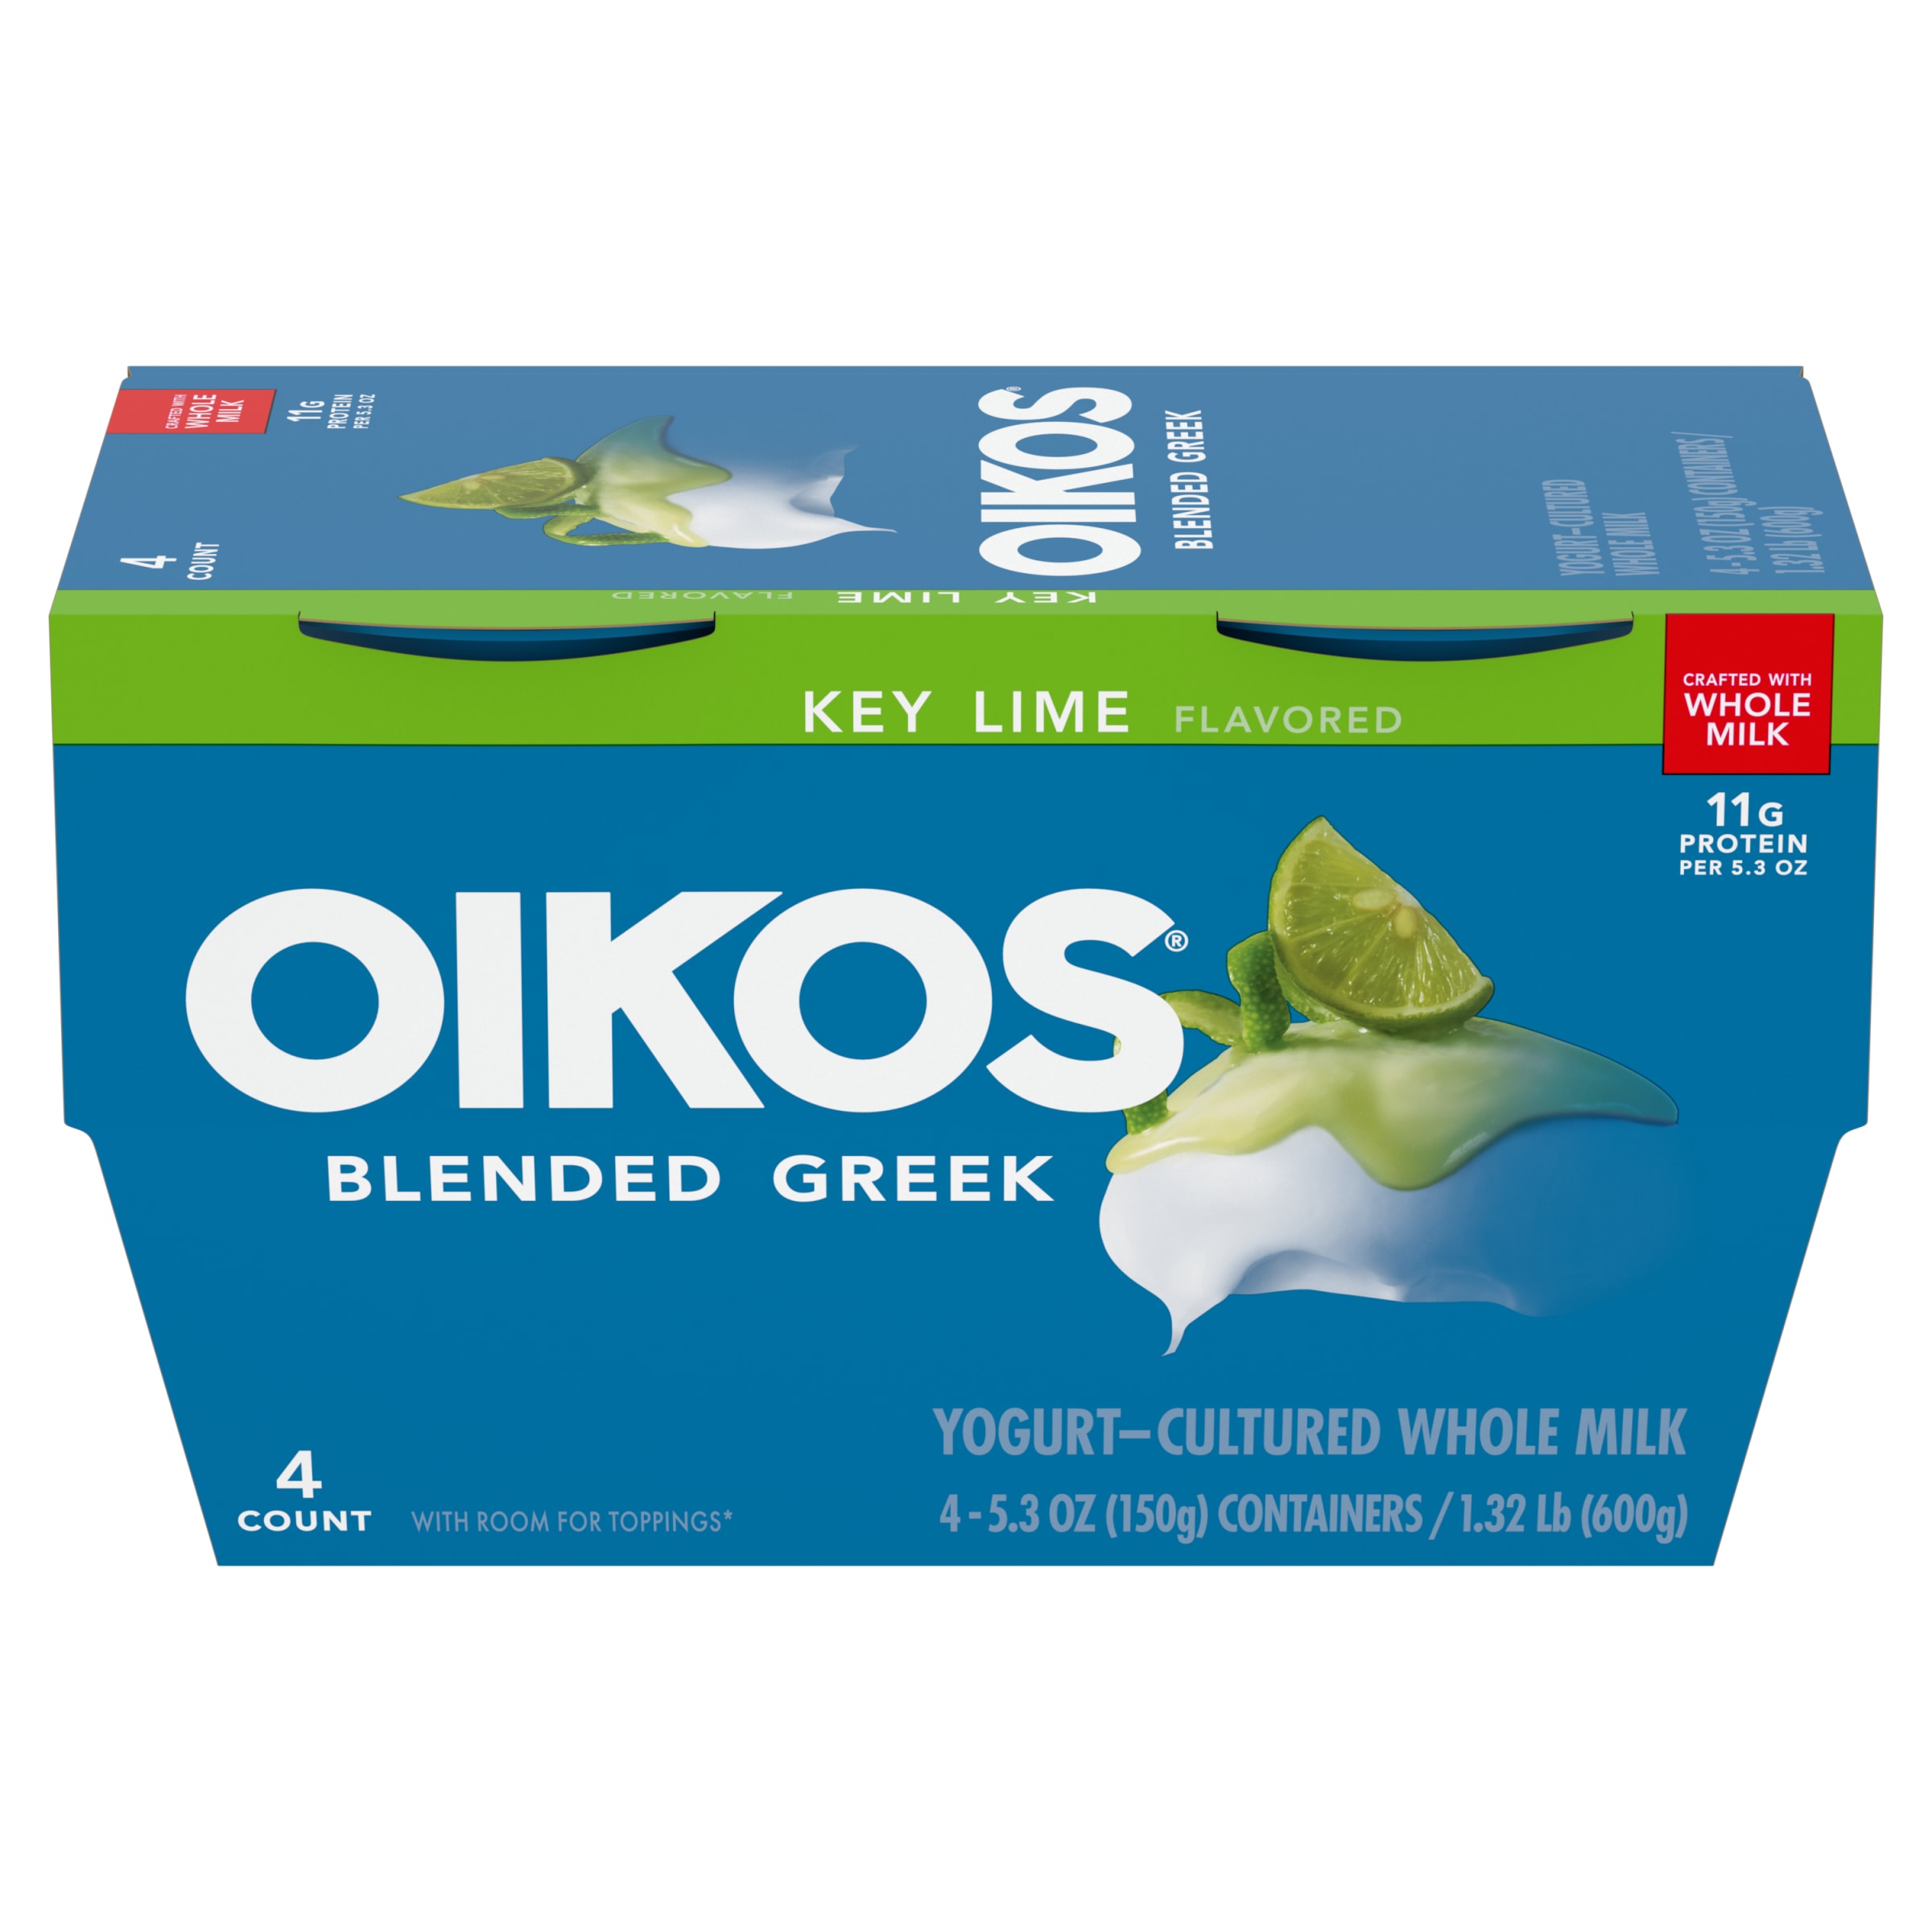 Oikos Whole Milk Key Lime Greek Yogurt, 5.3 Oz. Cups, 4 Count - image 1 of 5